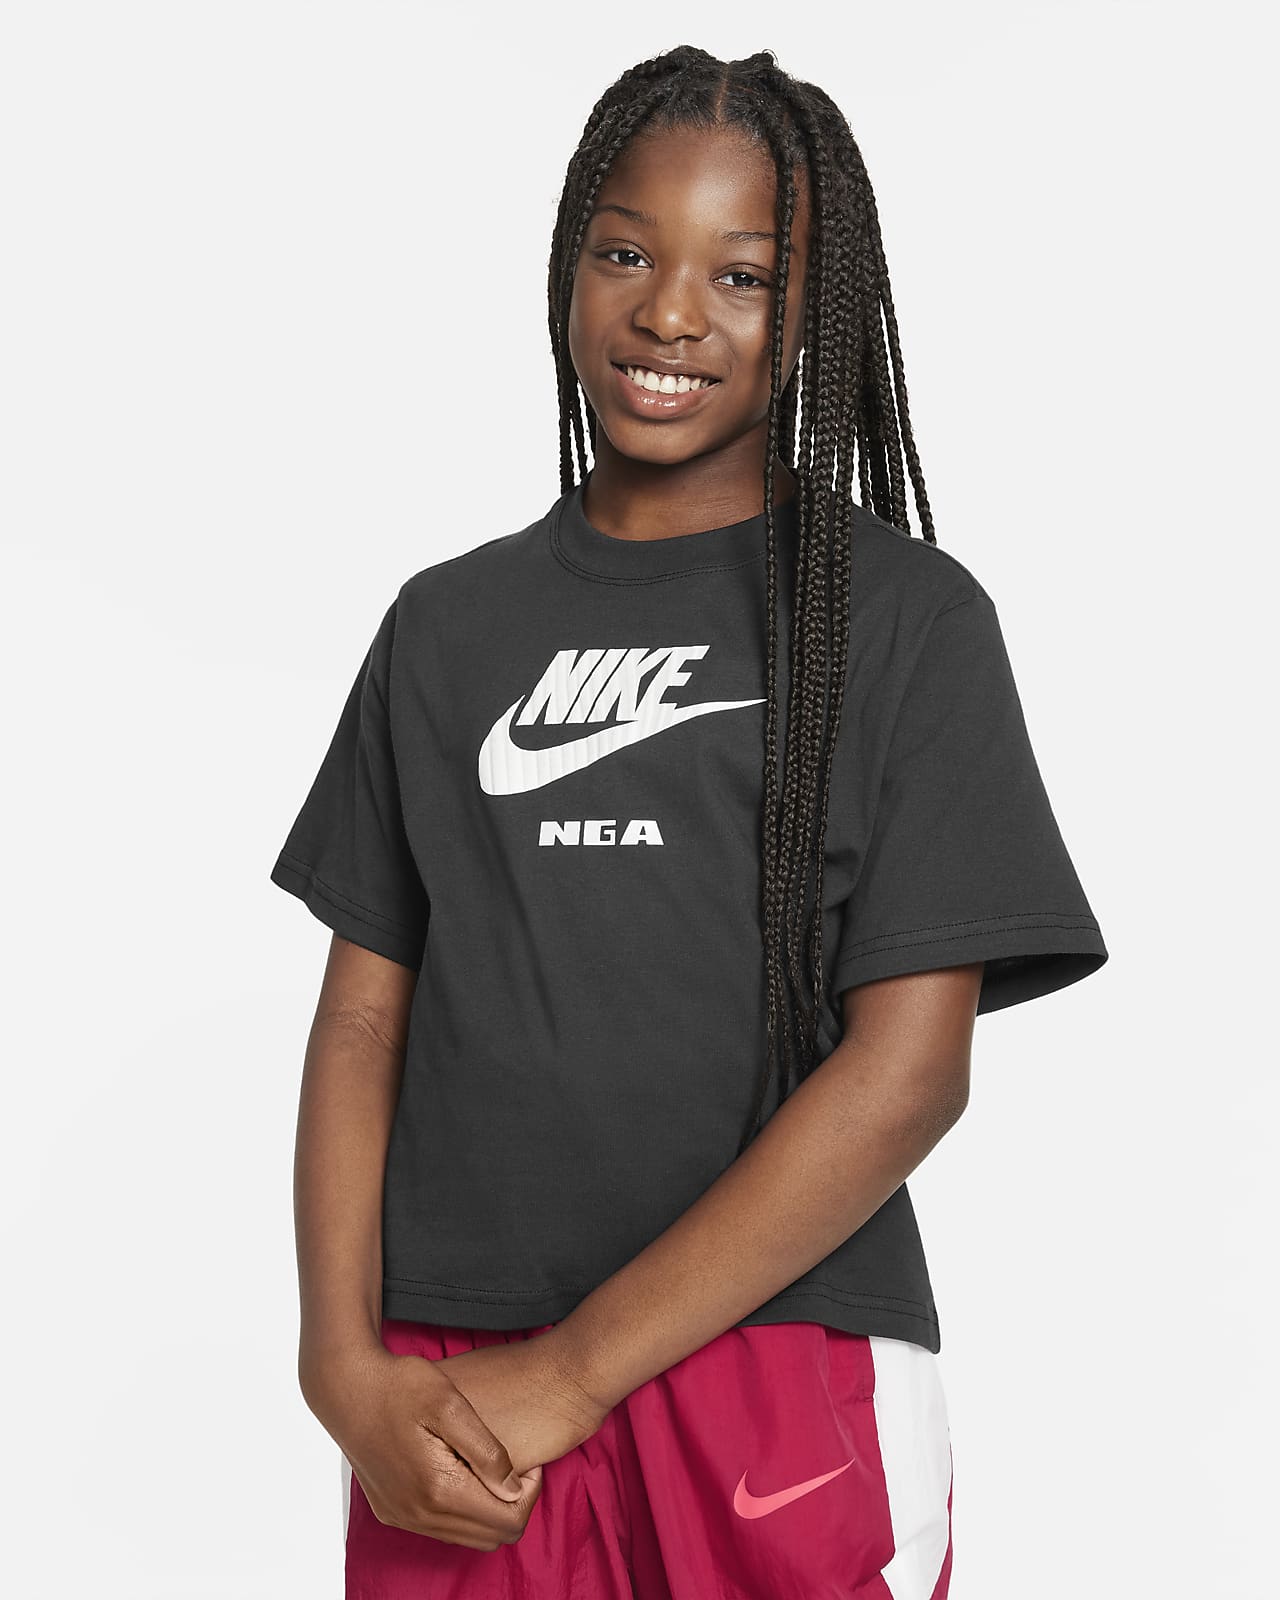 Nigeria Big Kids' (Girls') Nike T-Shirt